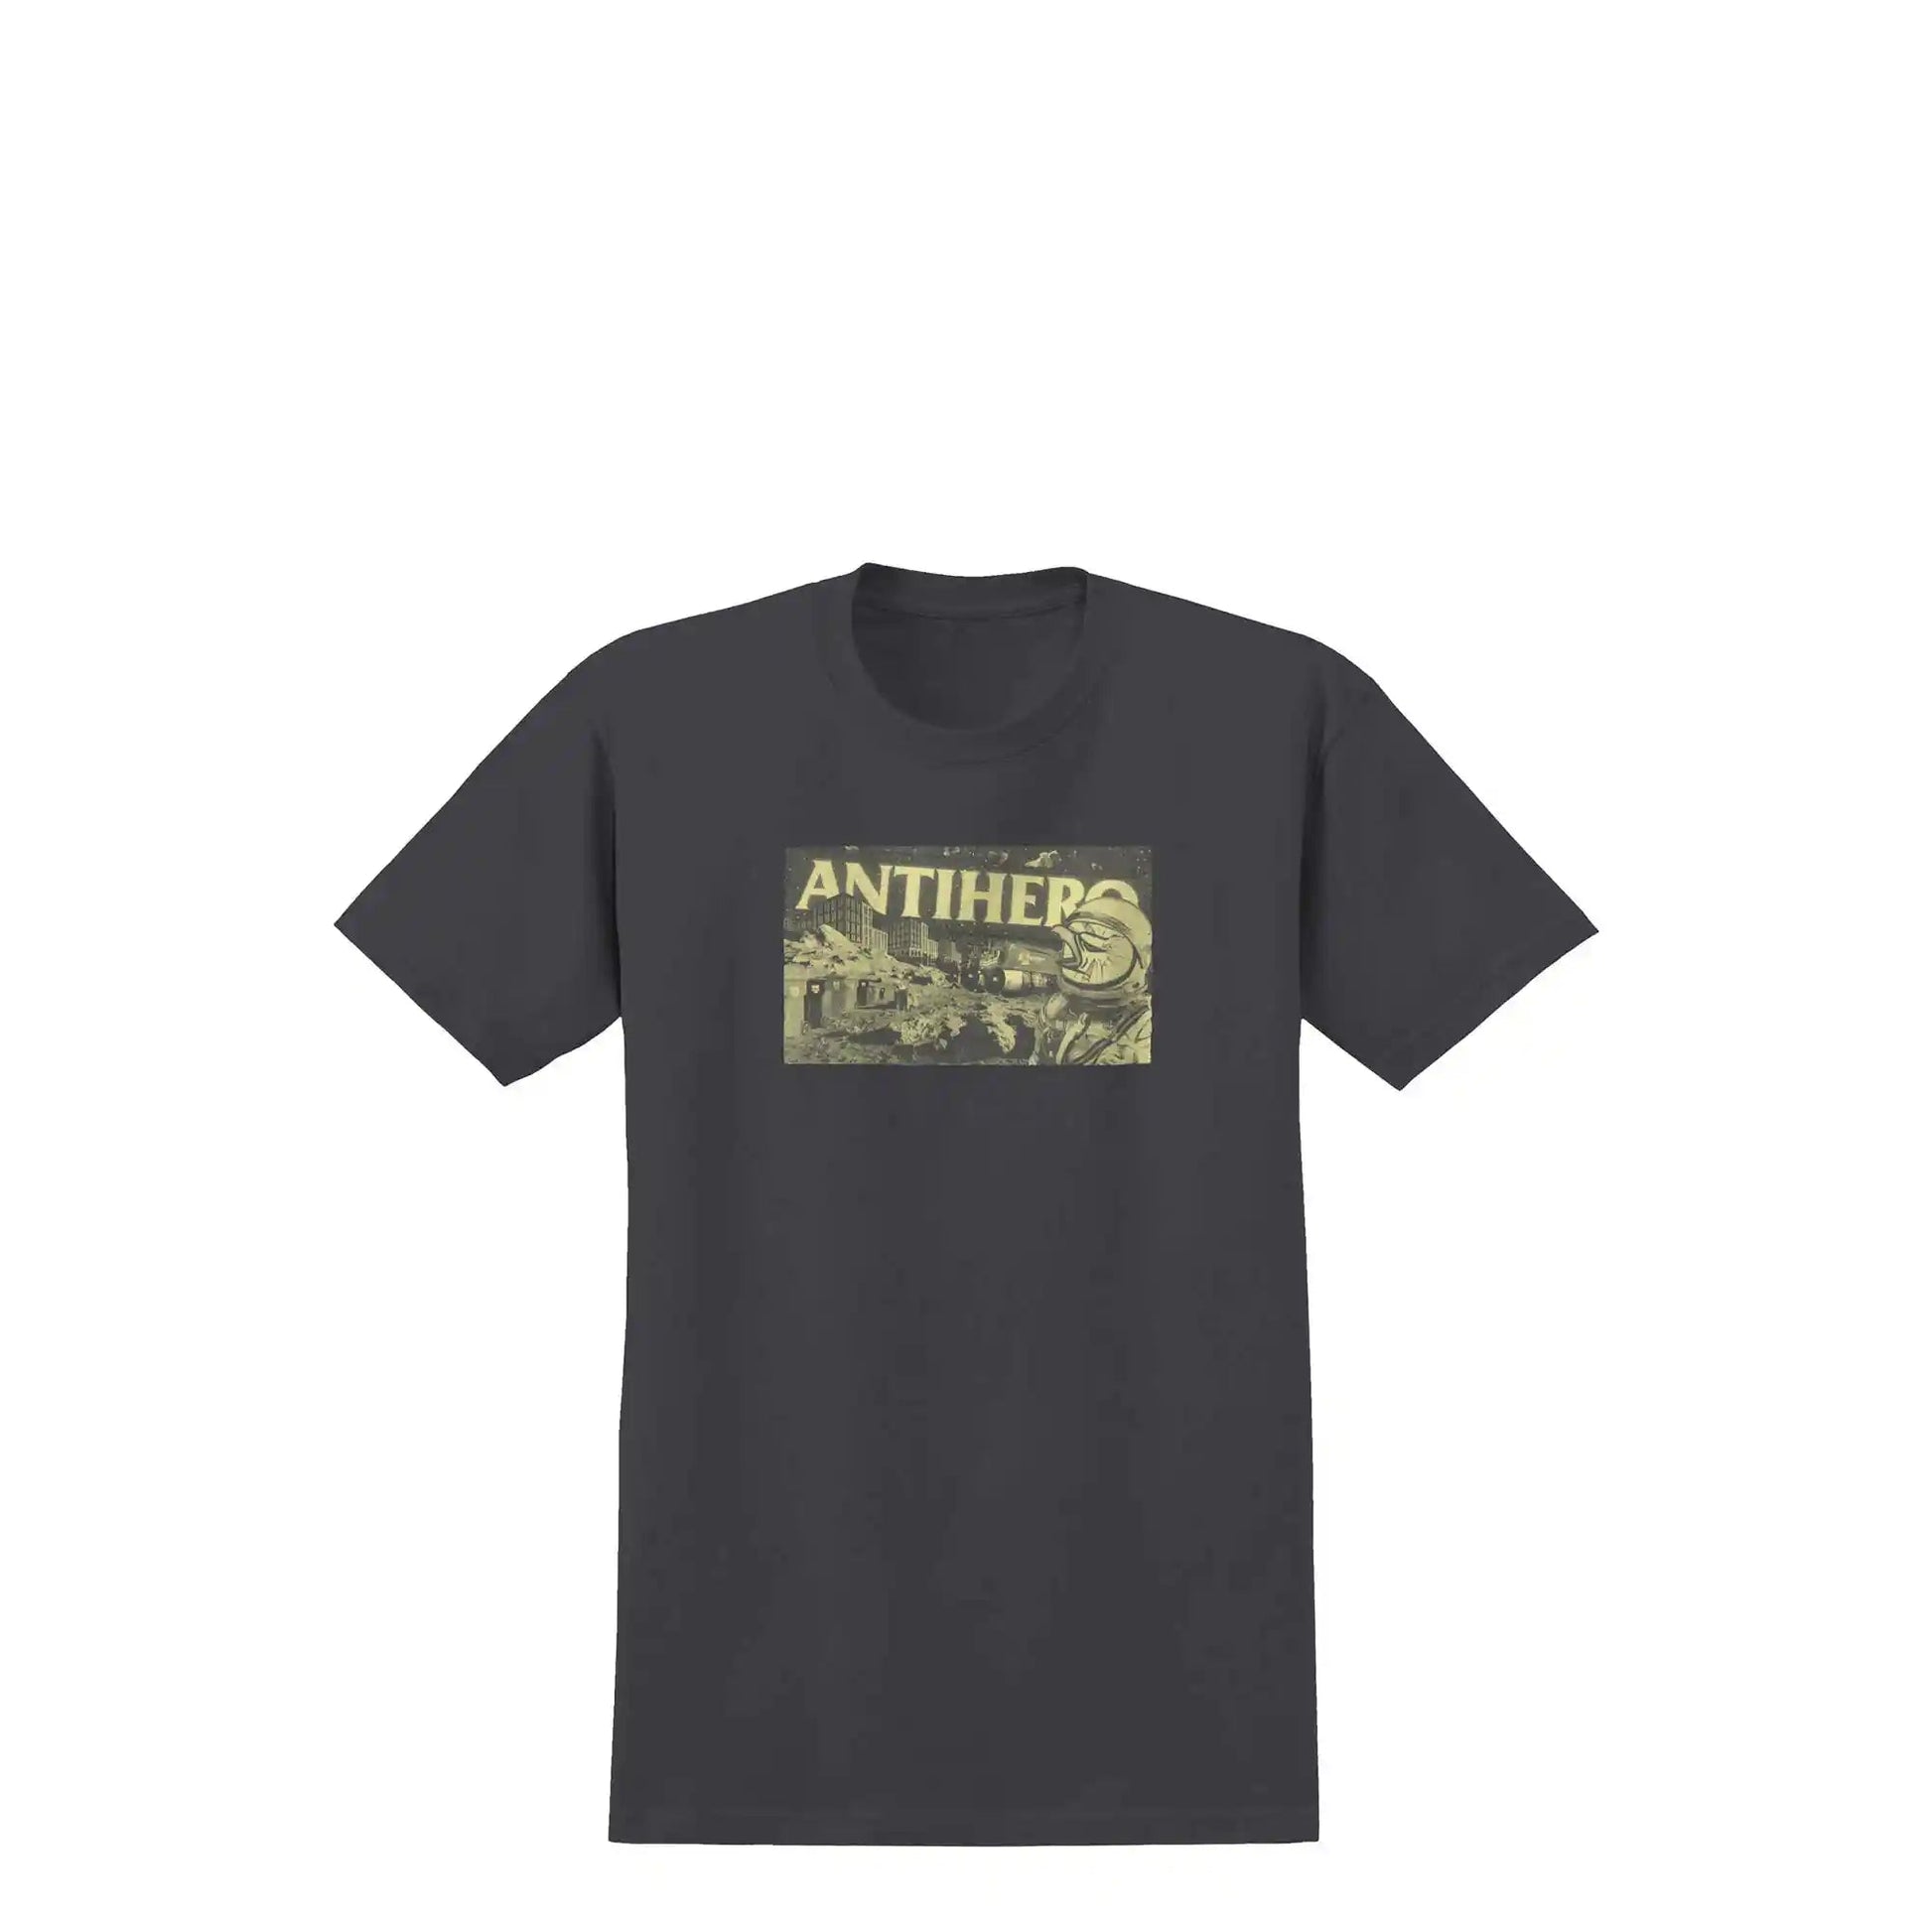 Anti Hero Space Condo T-Shirt, coal w/ pale yellow print - Tiki Room Skateboards - 1